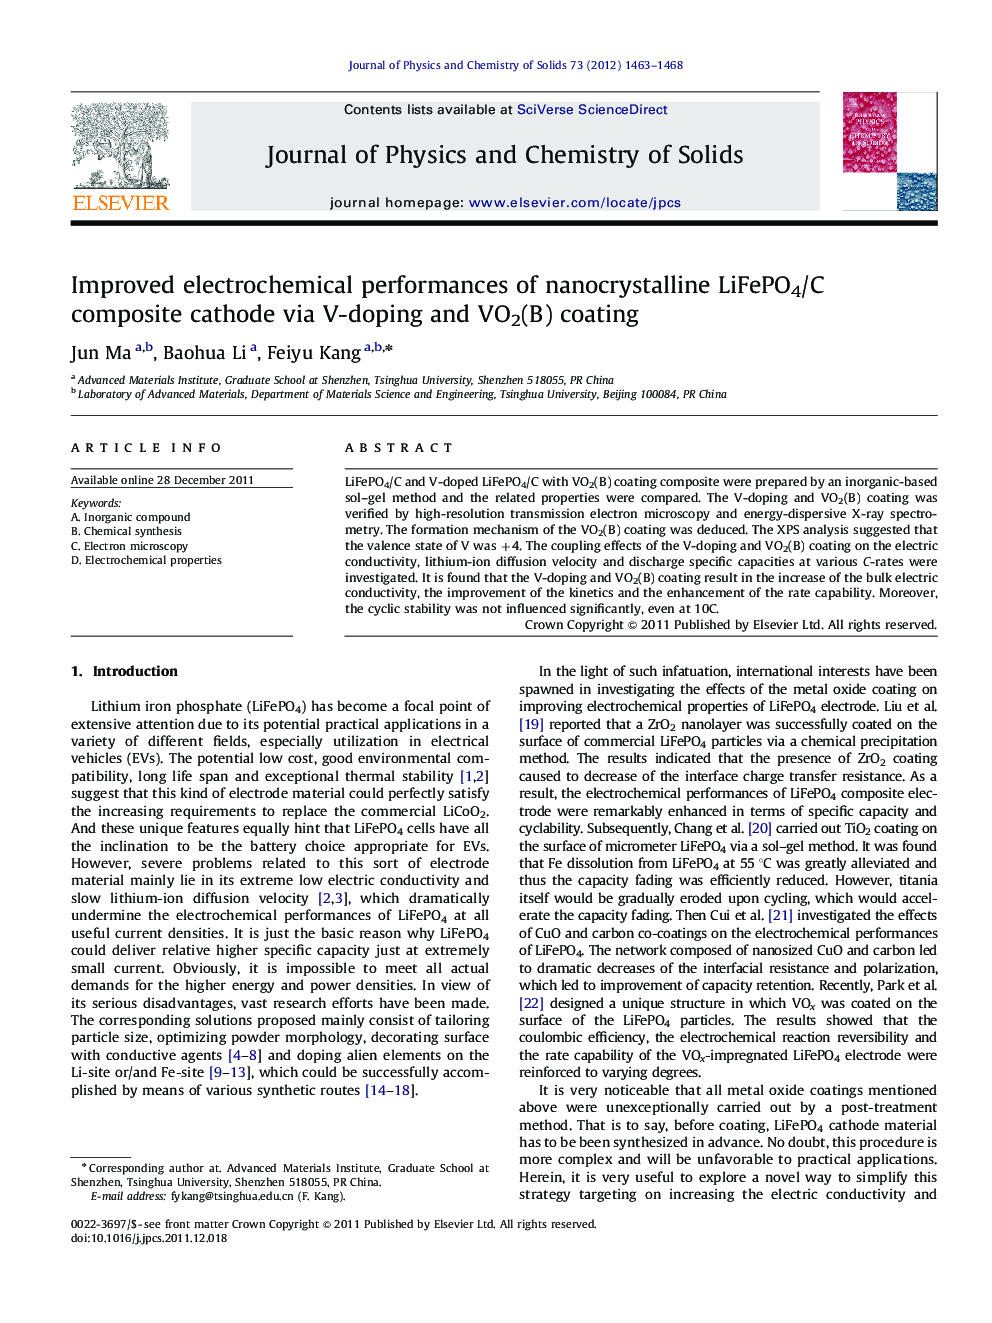 Improved electrochemical performances of nanocrystalline LiFePO4/C composite cathode via V-doping and VO2(B) coating